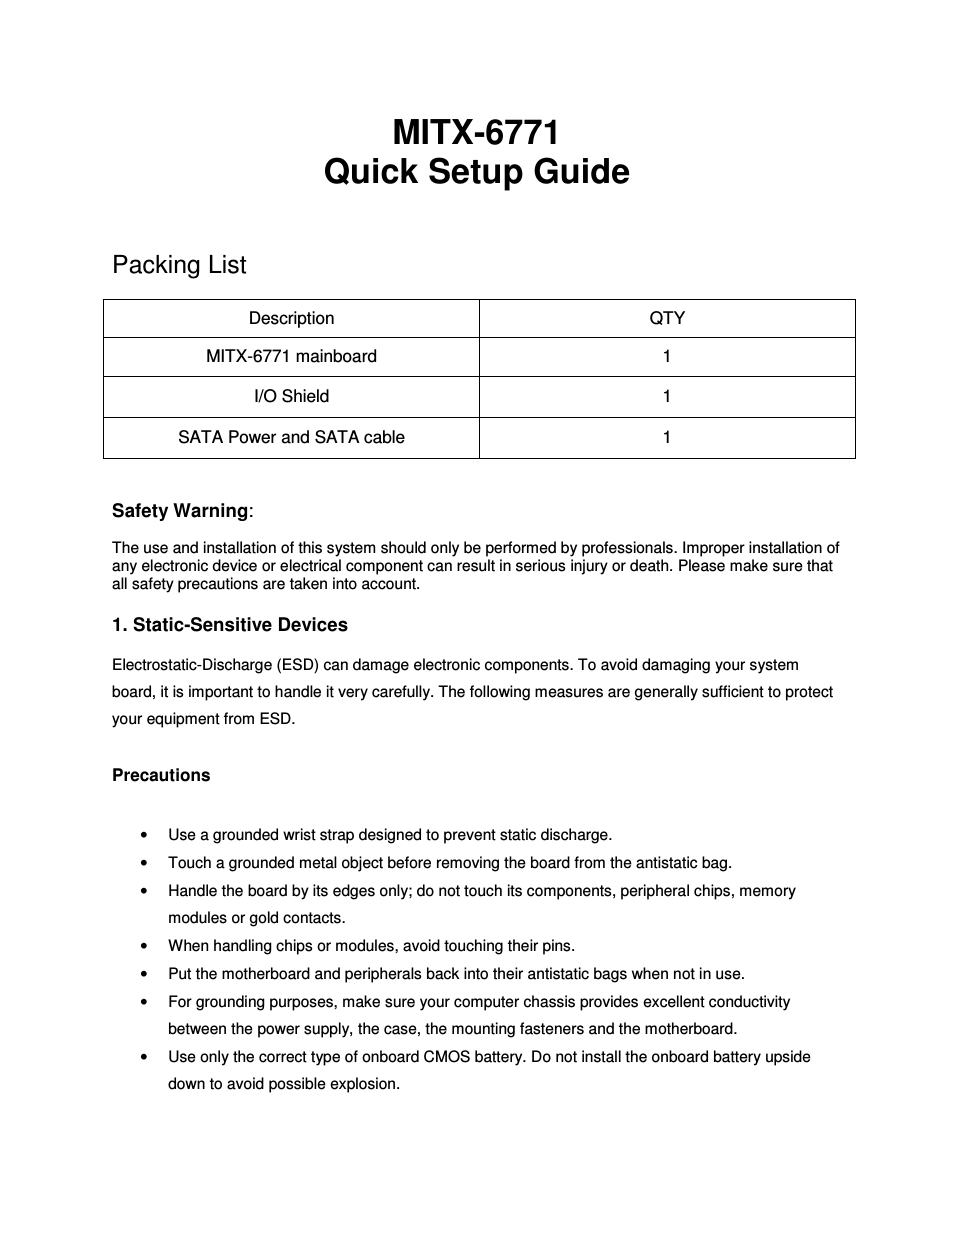 MITX-6771 Quick Start Guide